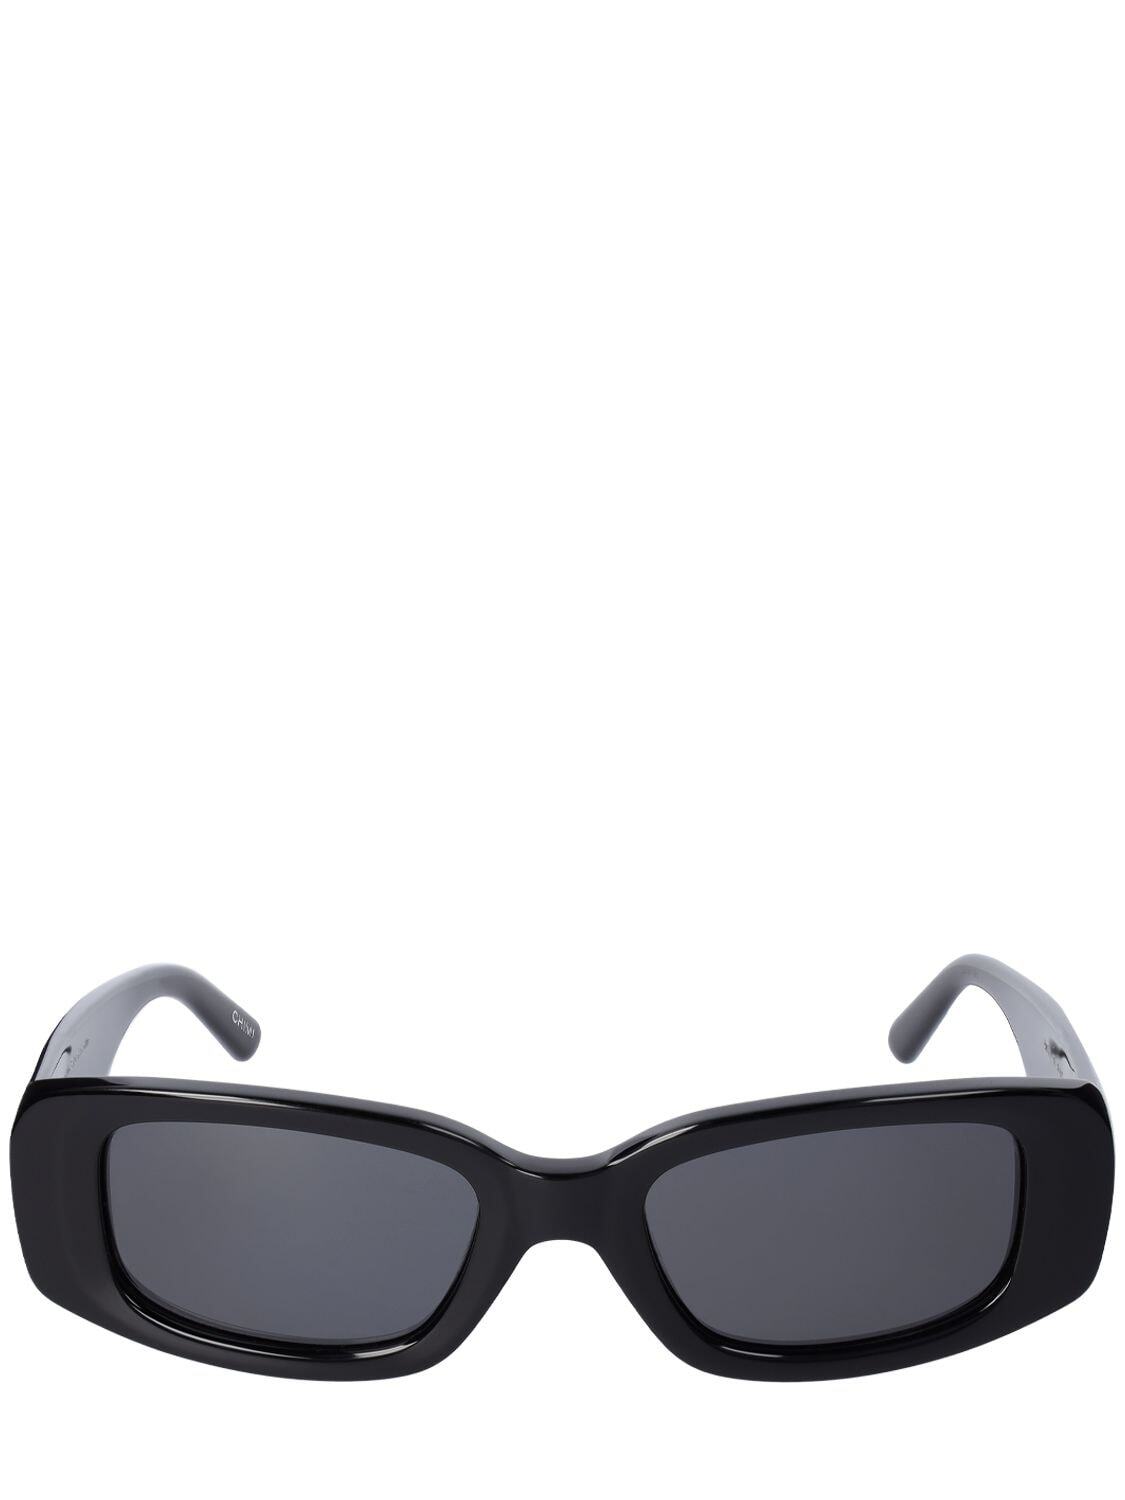 CHIMI 10.2 Squared Acetate Sunglasses in black